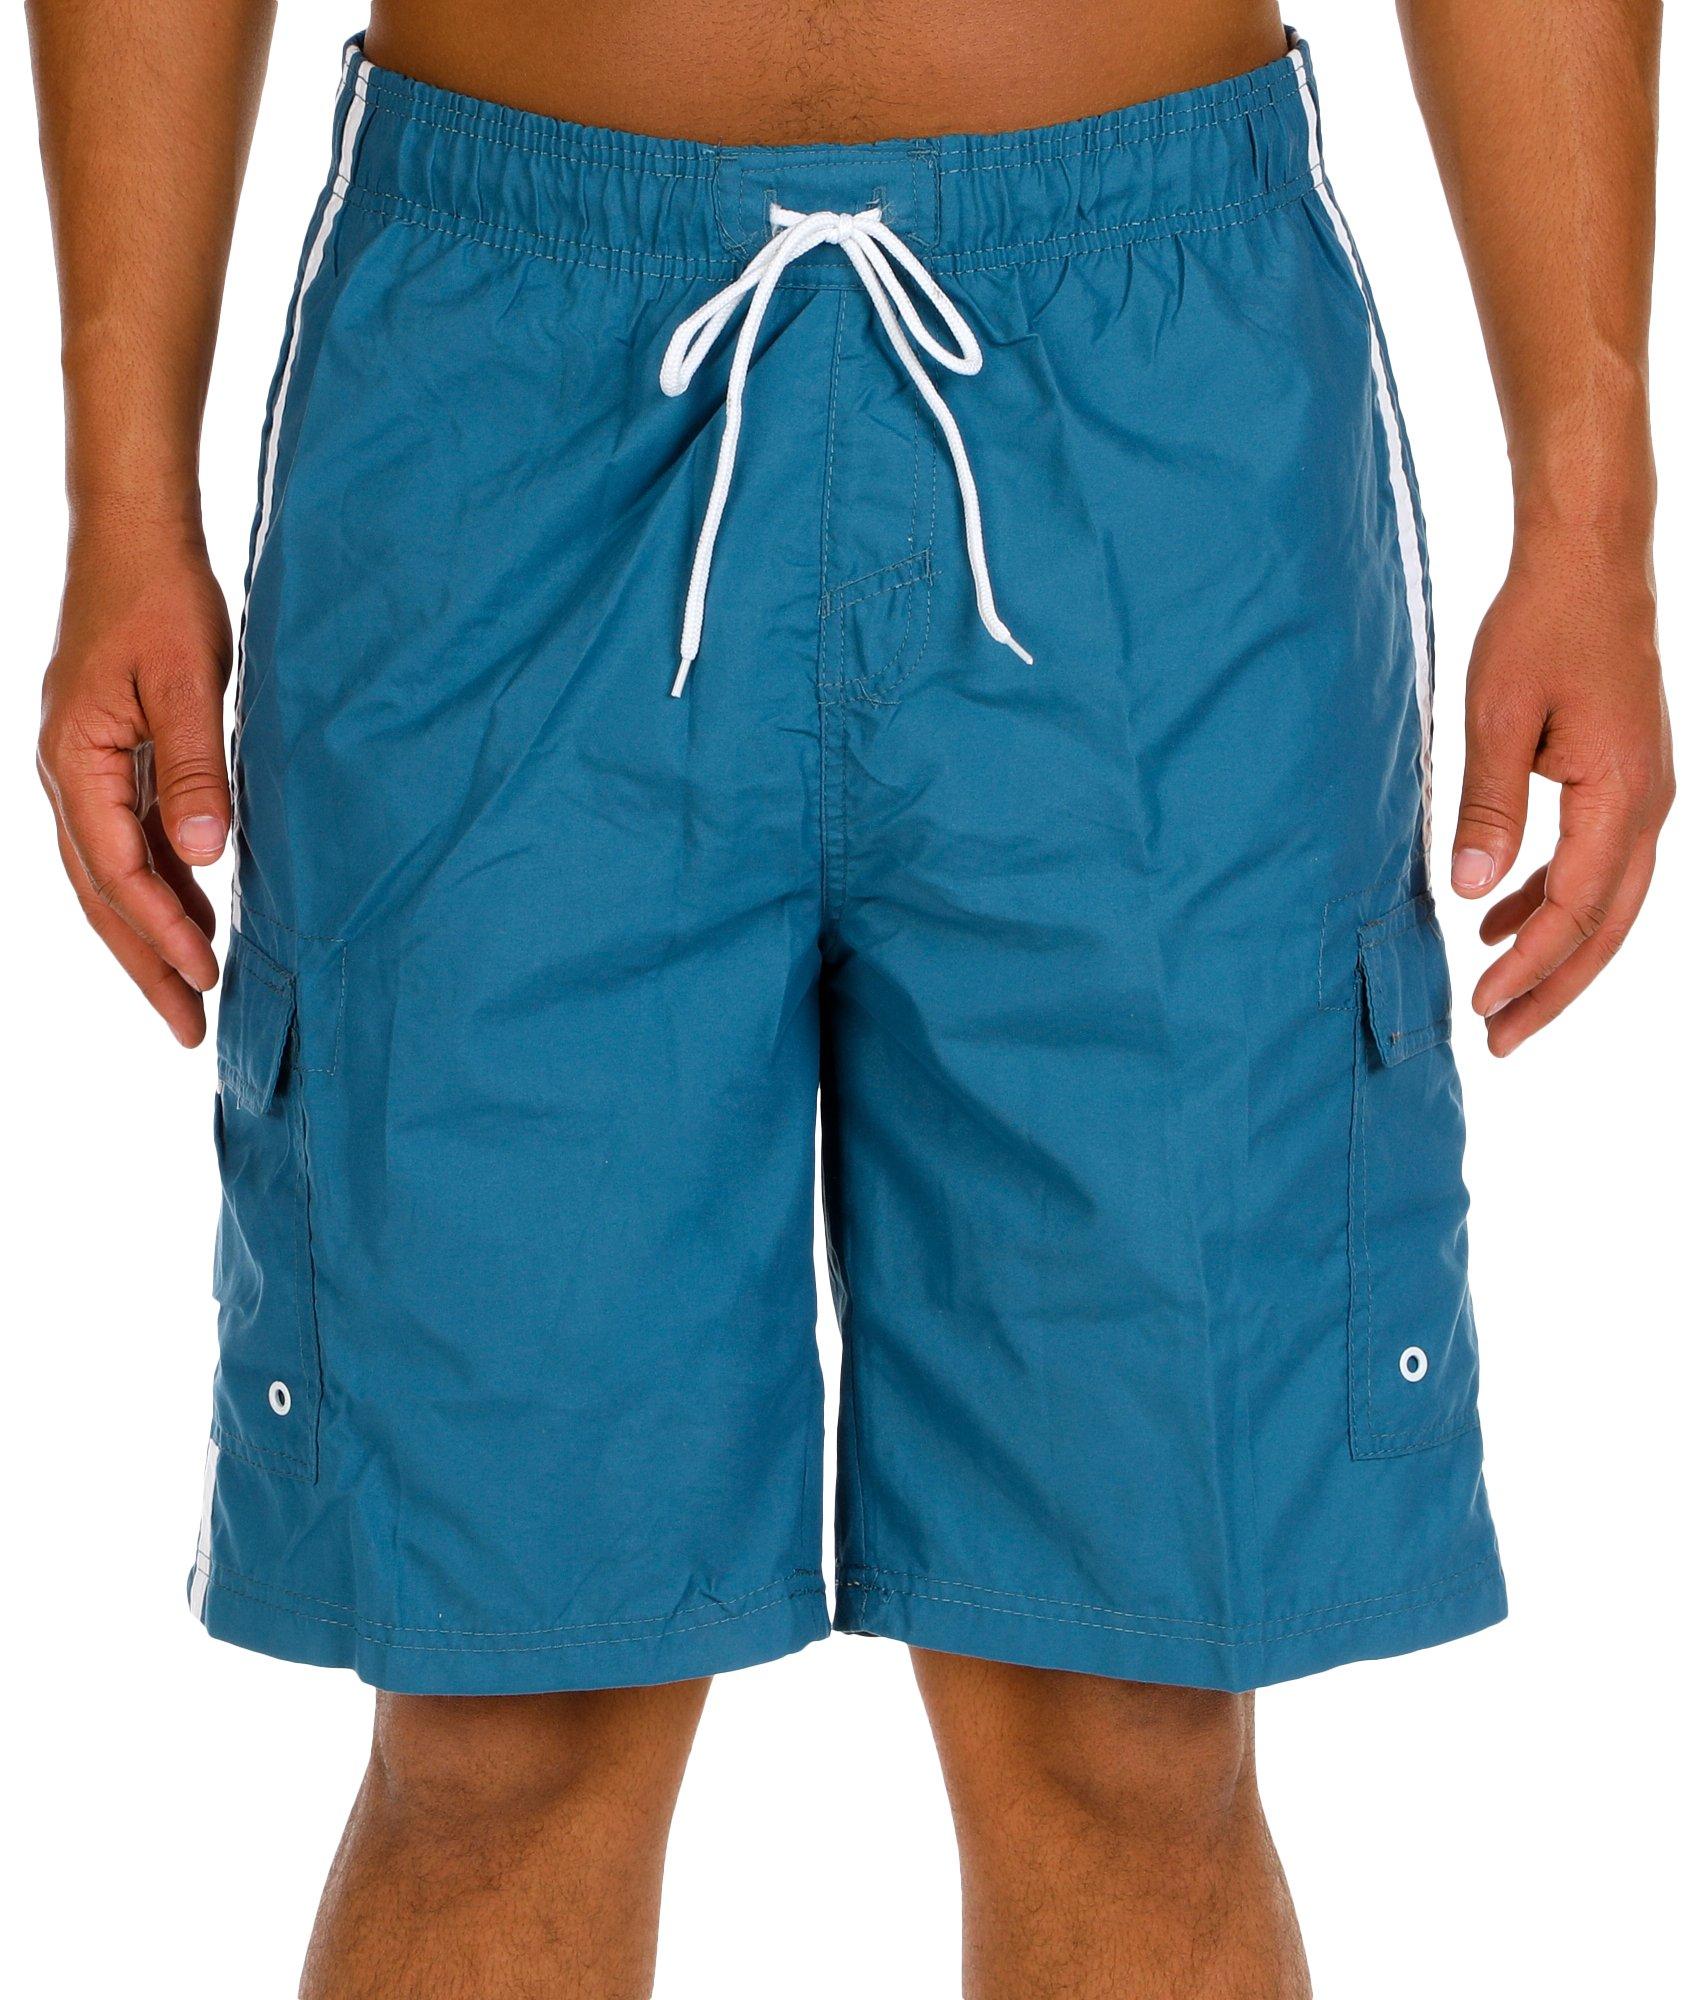 Men's Solid Swimwear Shorts